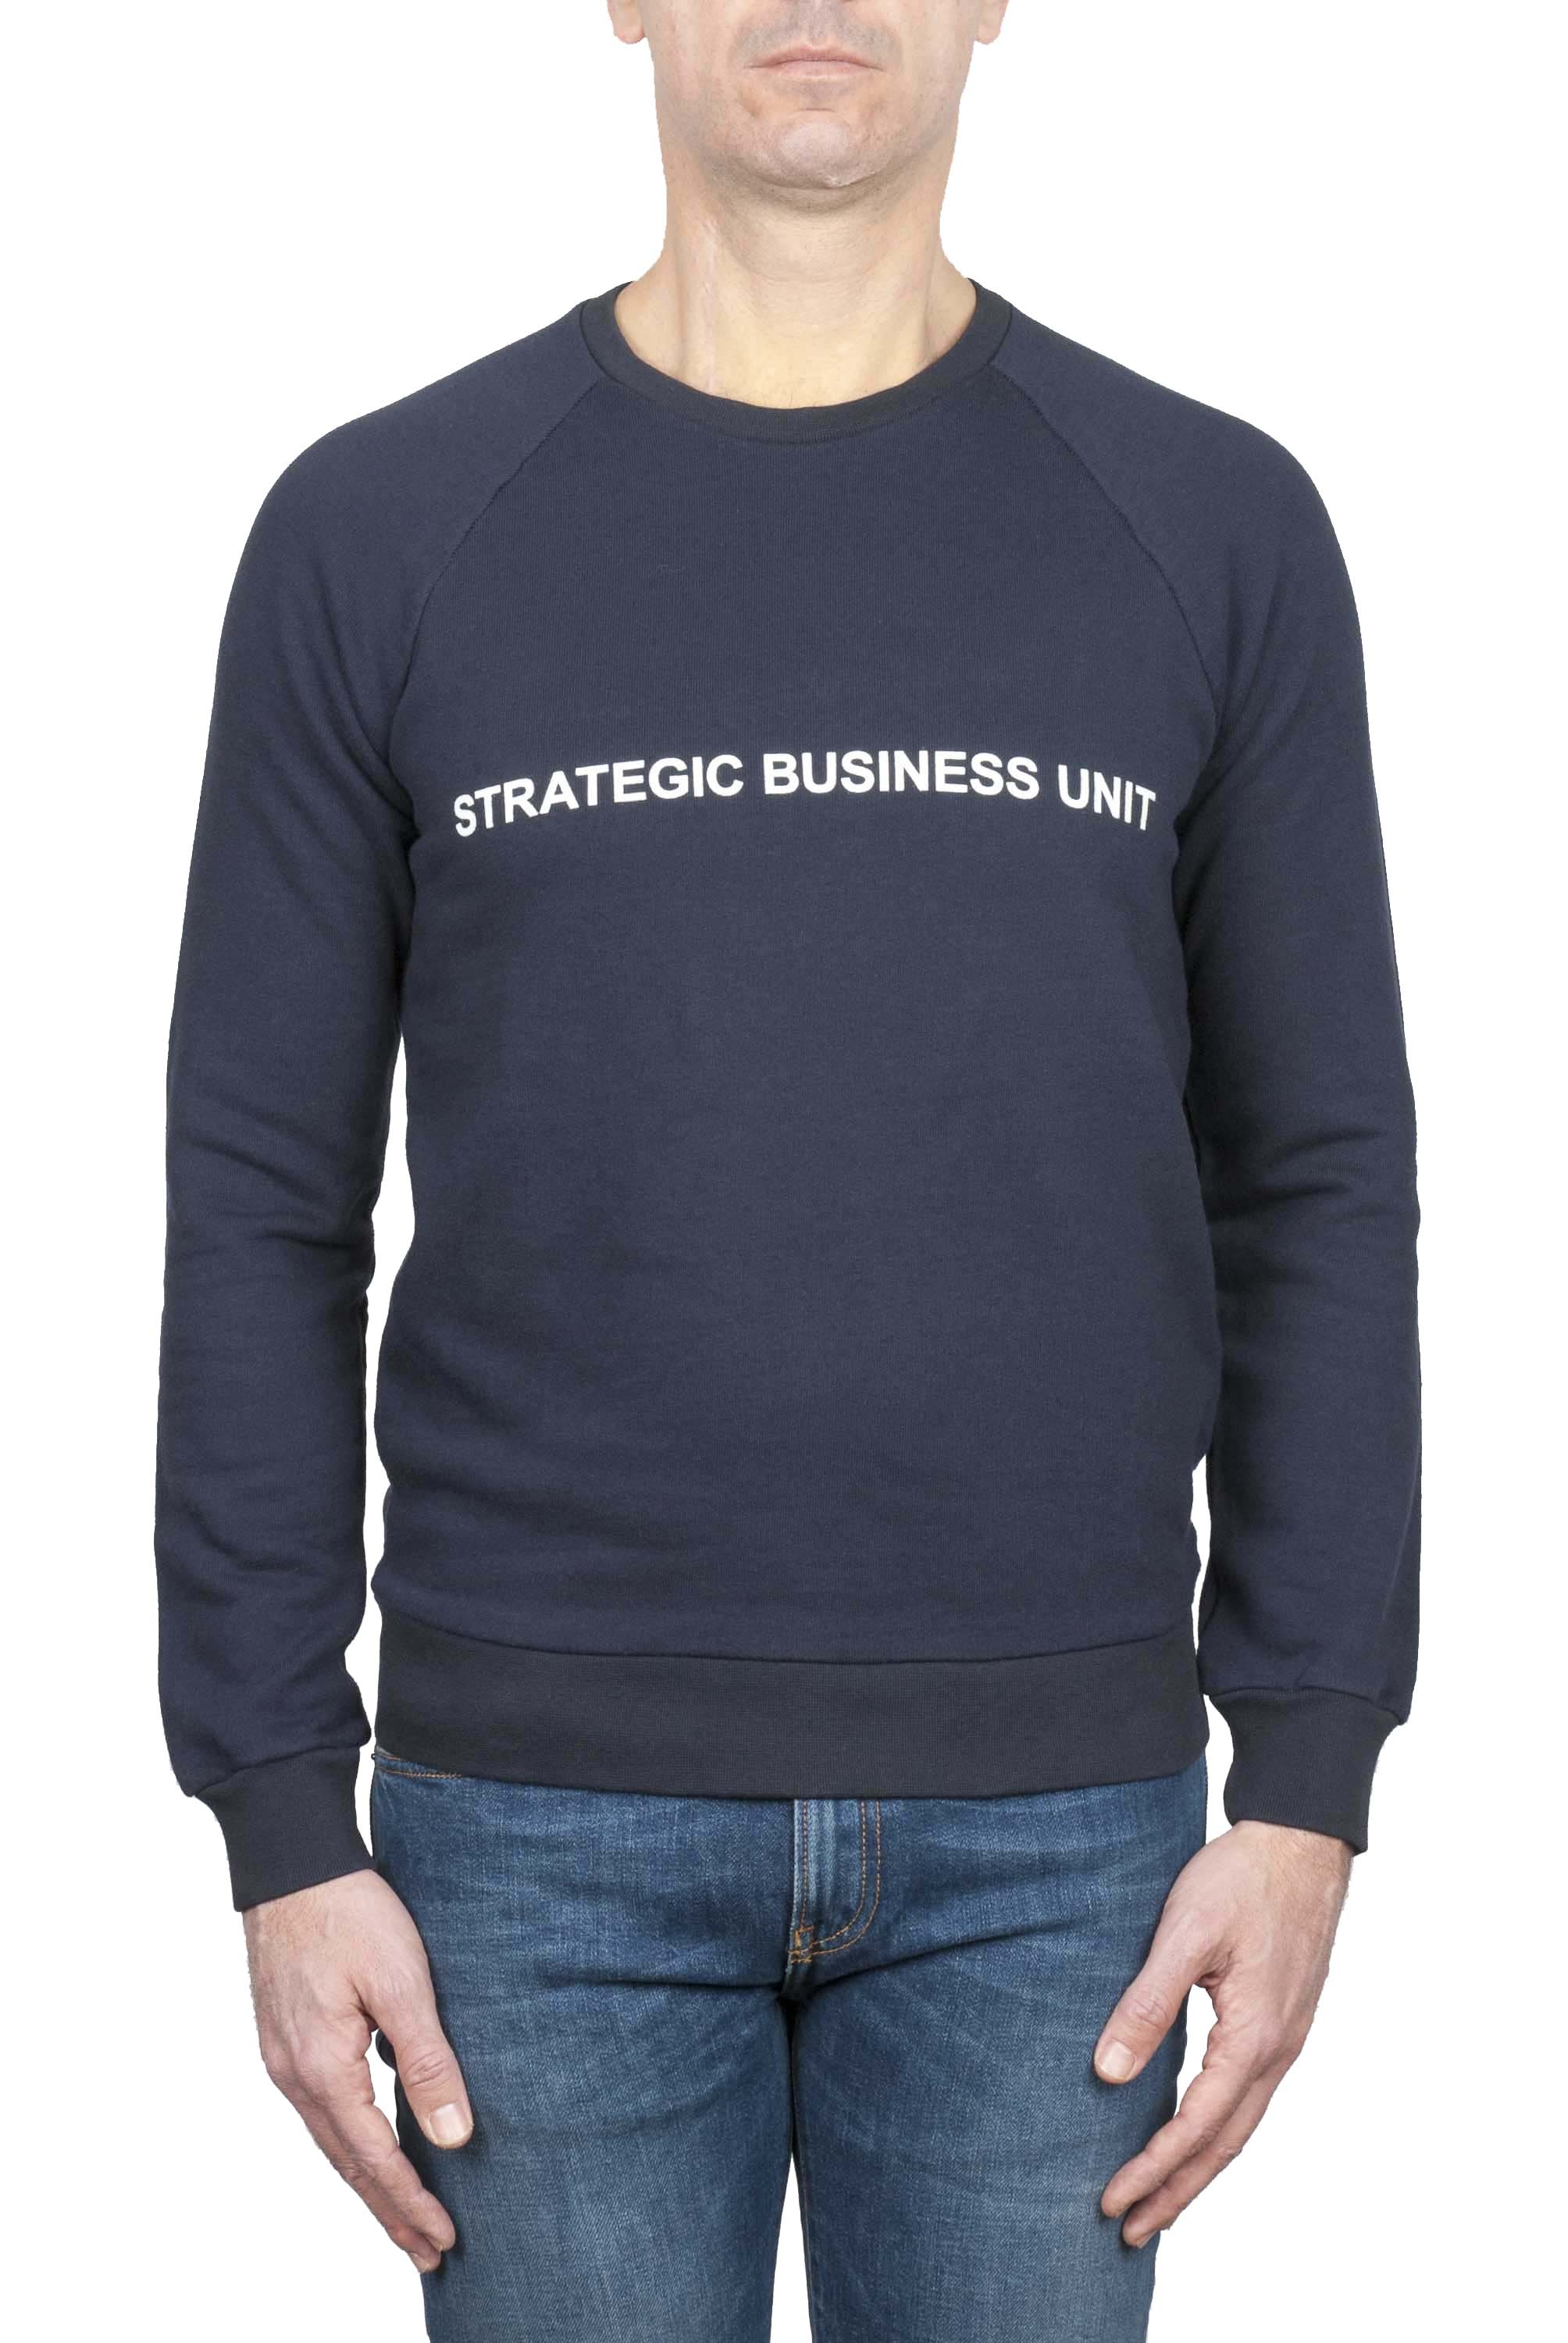 SBU 01466_2020SS Strategic Business Unitロゴプリントクルーネックスウェットシャツ 01